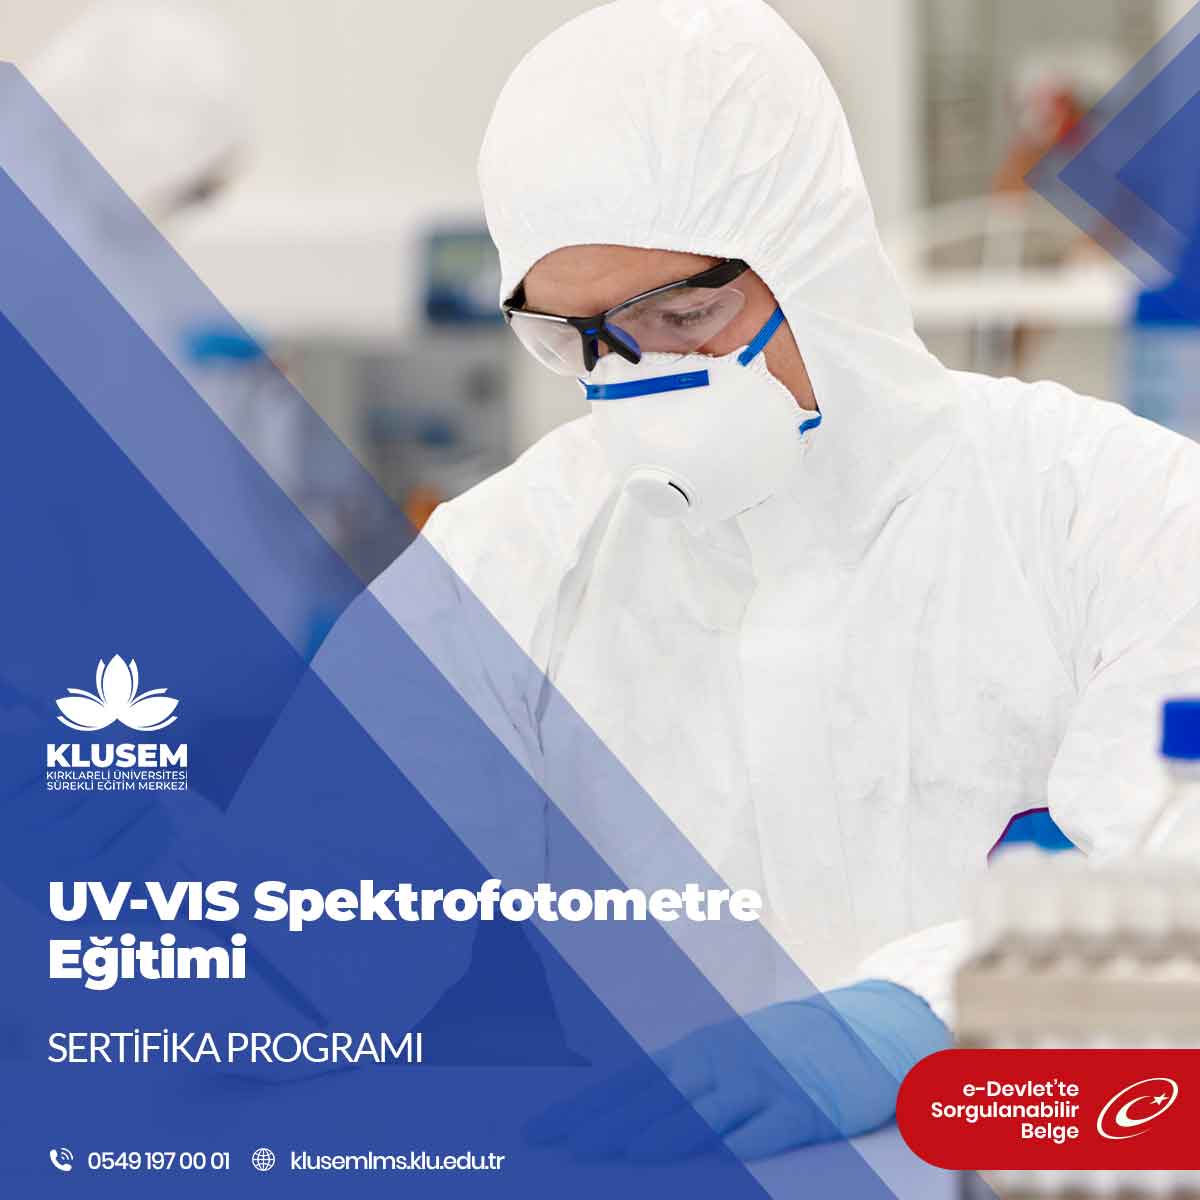 UV-VIS Spektrofotometre Eğitimi Sertifika Programı